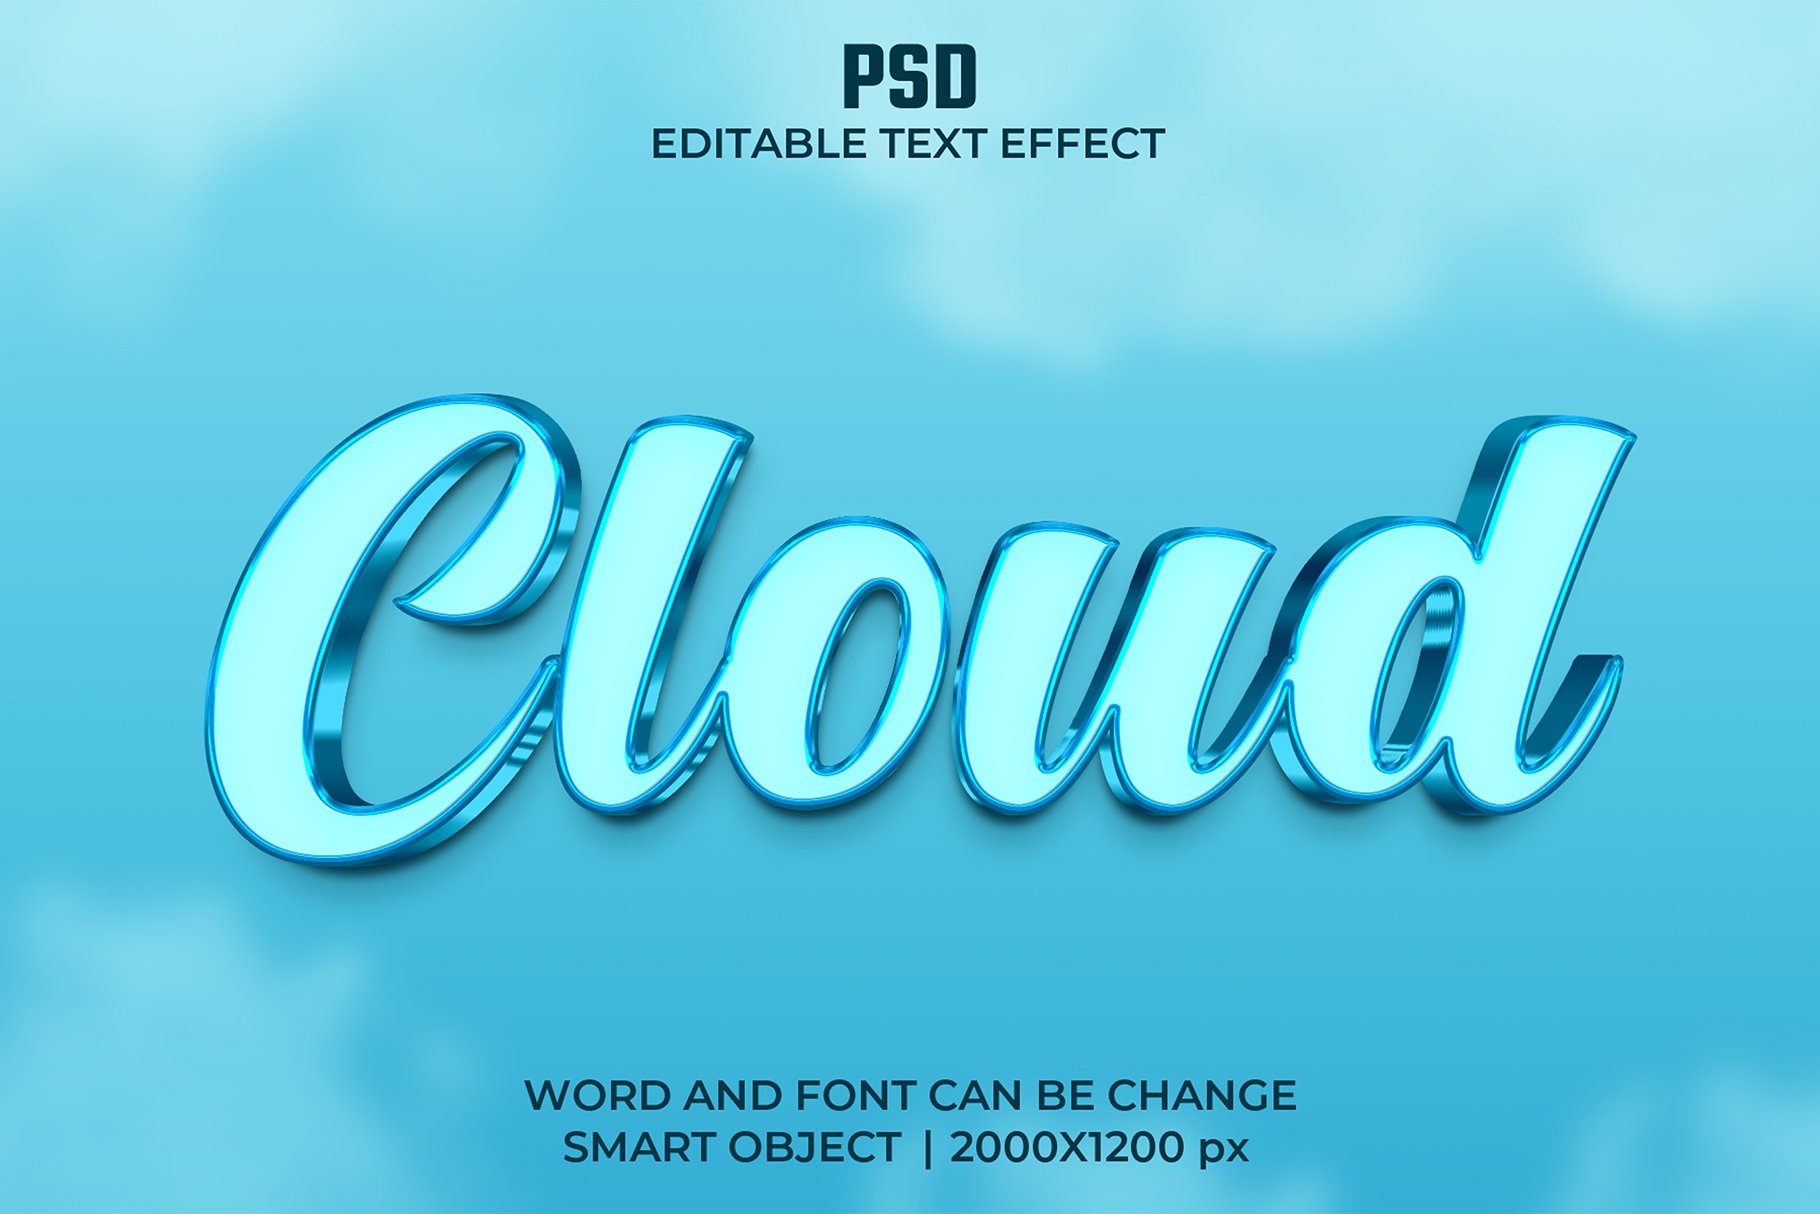 Cloud 3d Editable Psd Text Effectcover image.